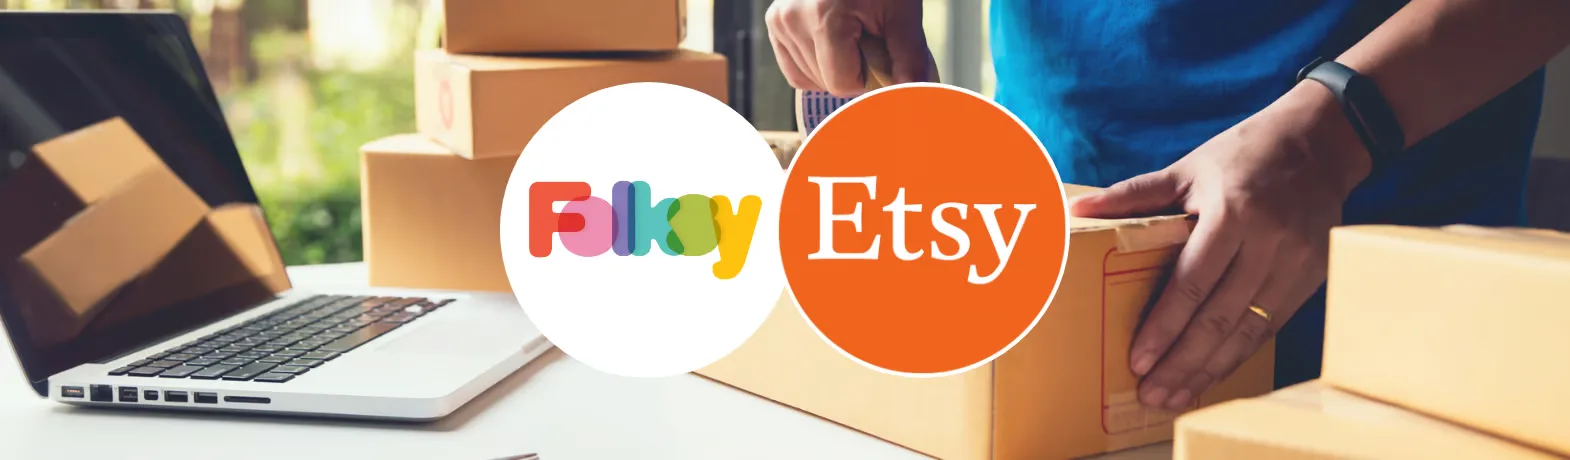 Folksy and Etsy marketplace logos